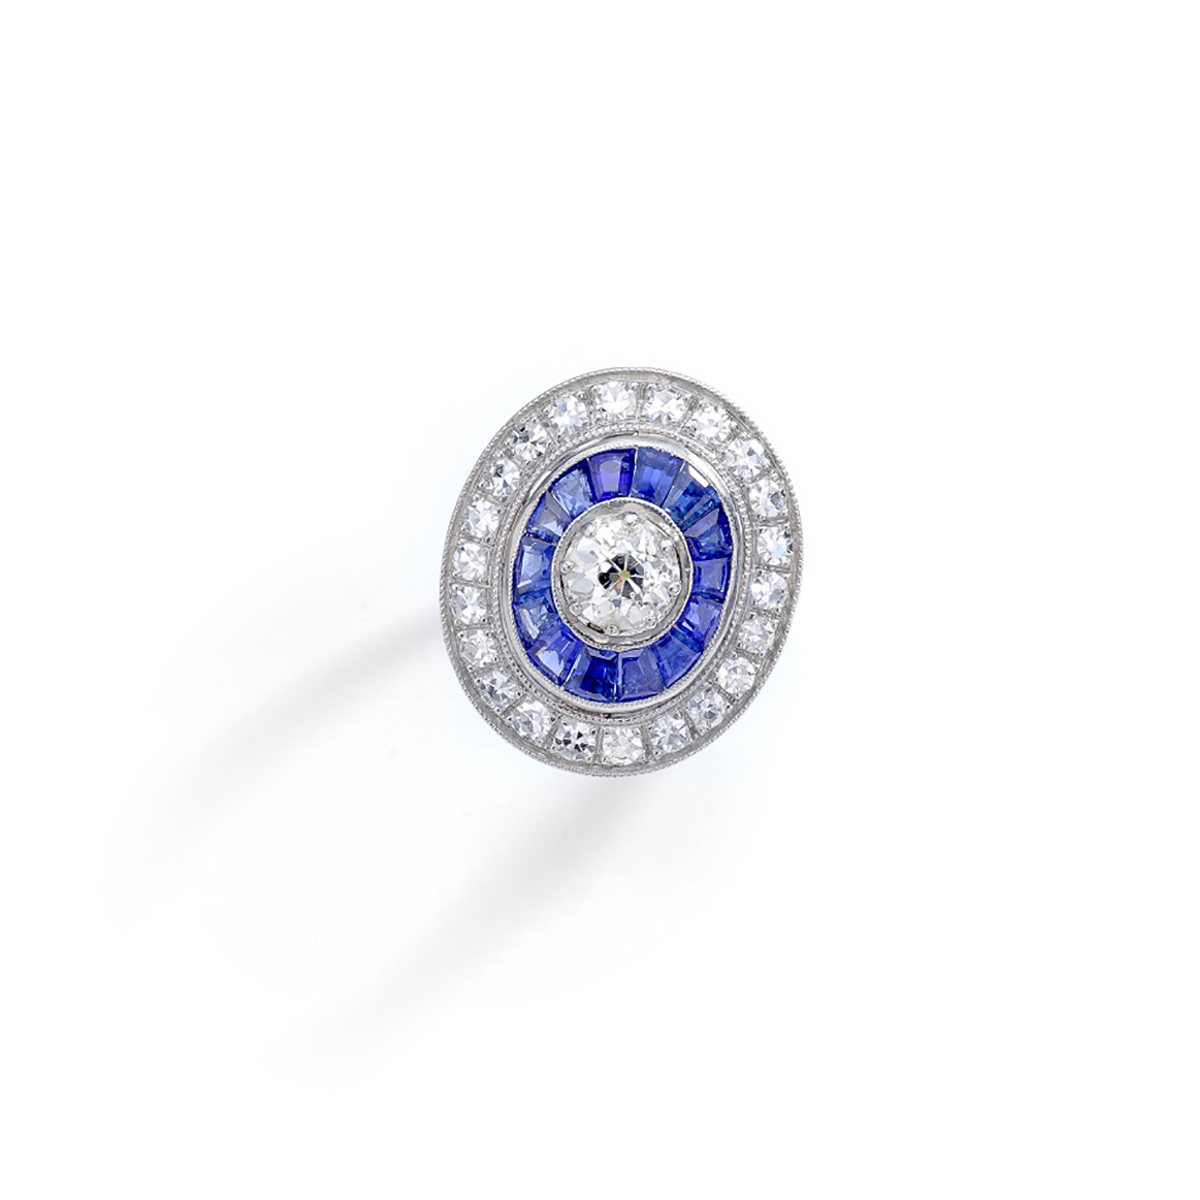 Art deco sapphire gem diamond ring